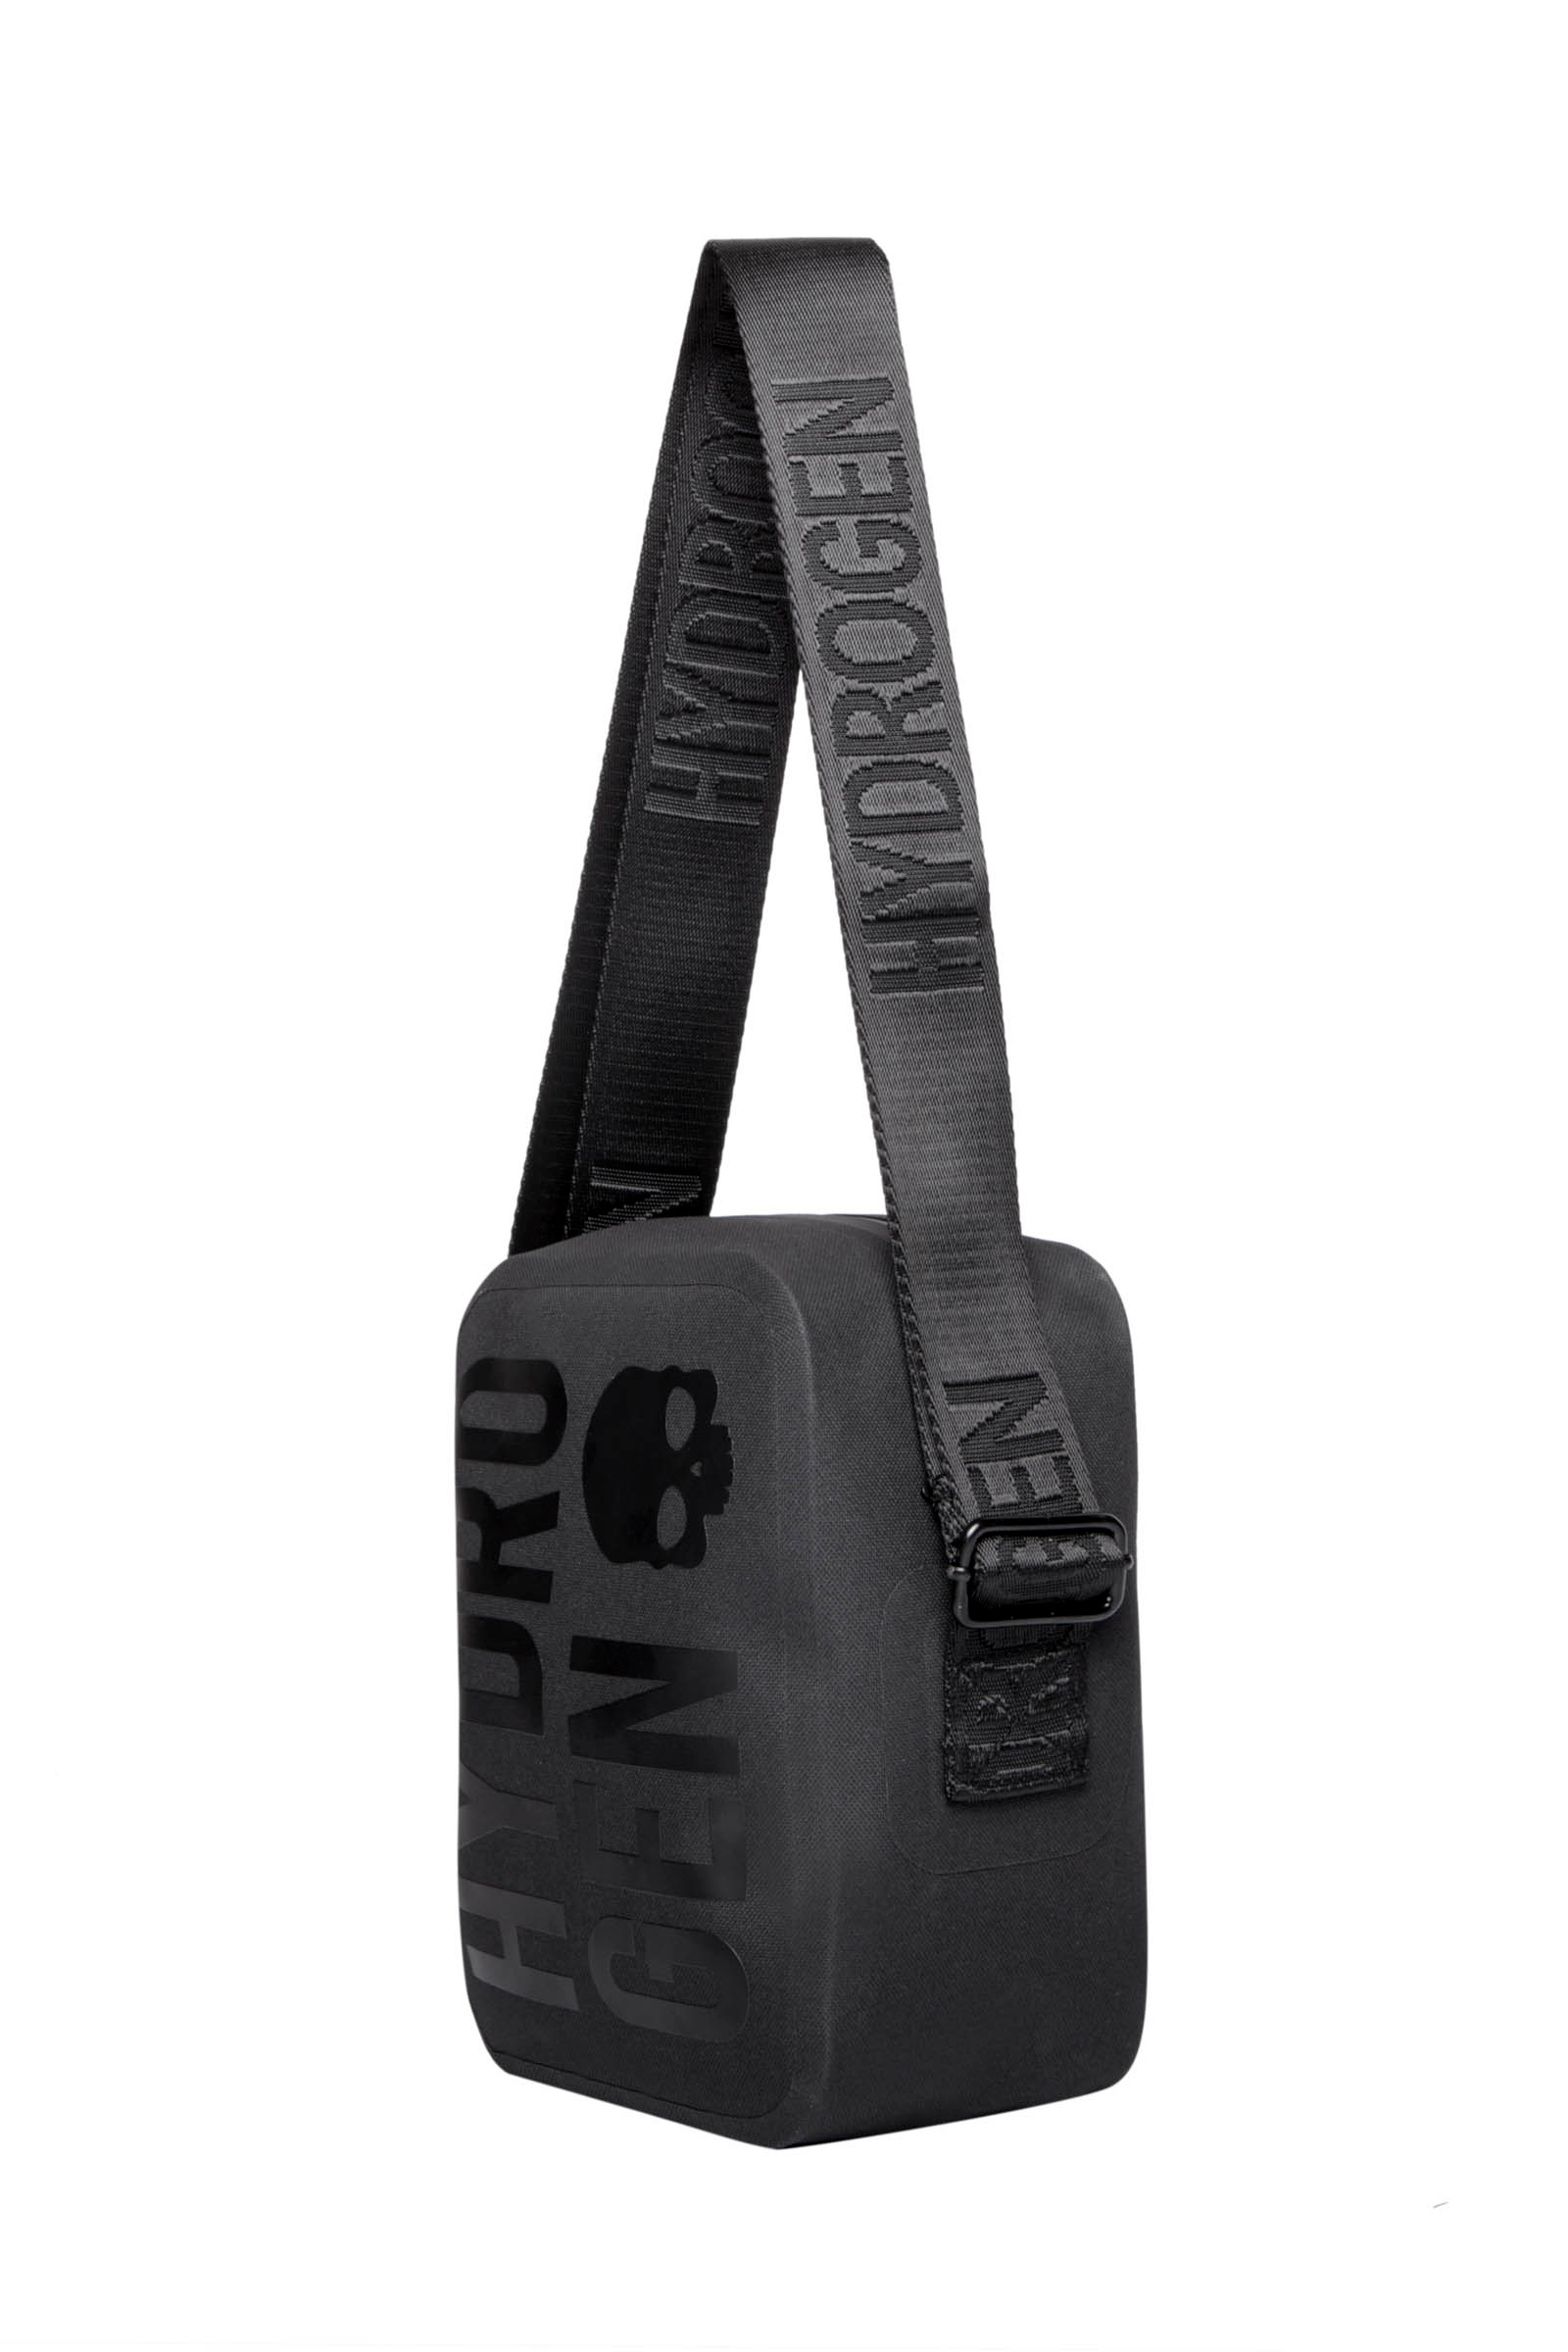 SHOULDER BAG - BLACK - Hydrogen - Luxury Sportwear